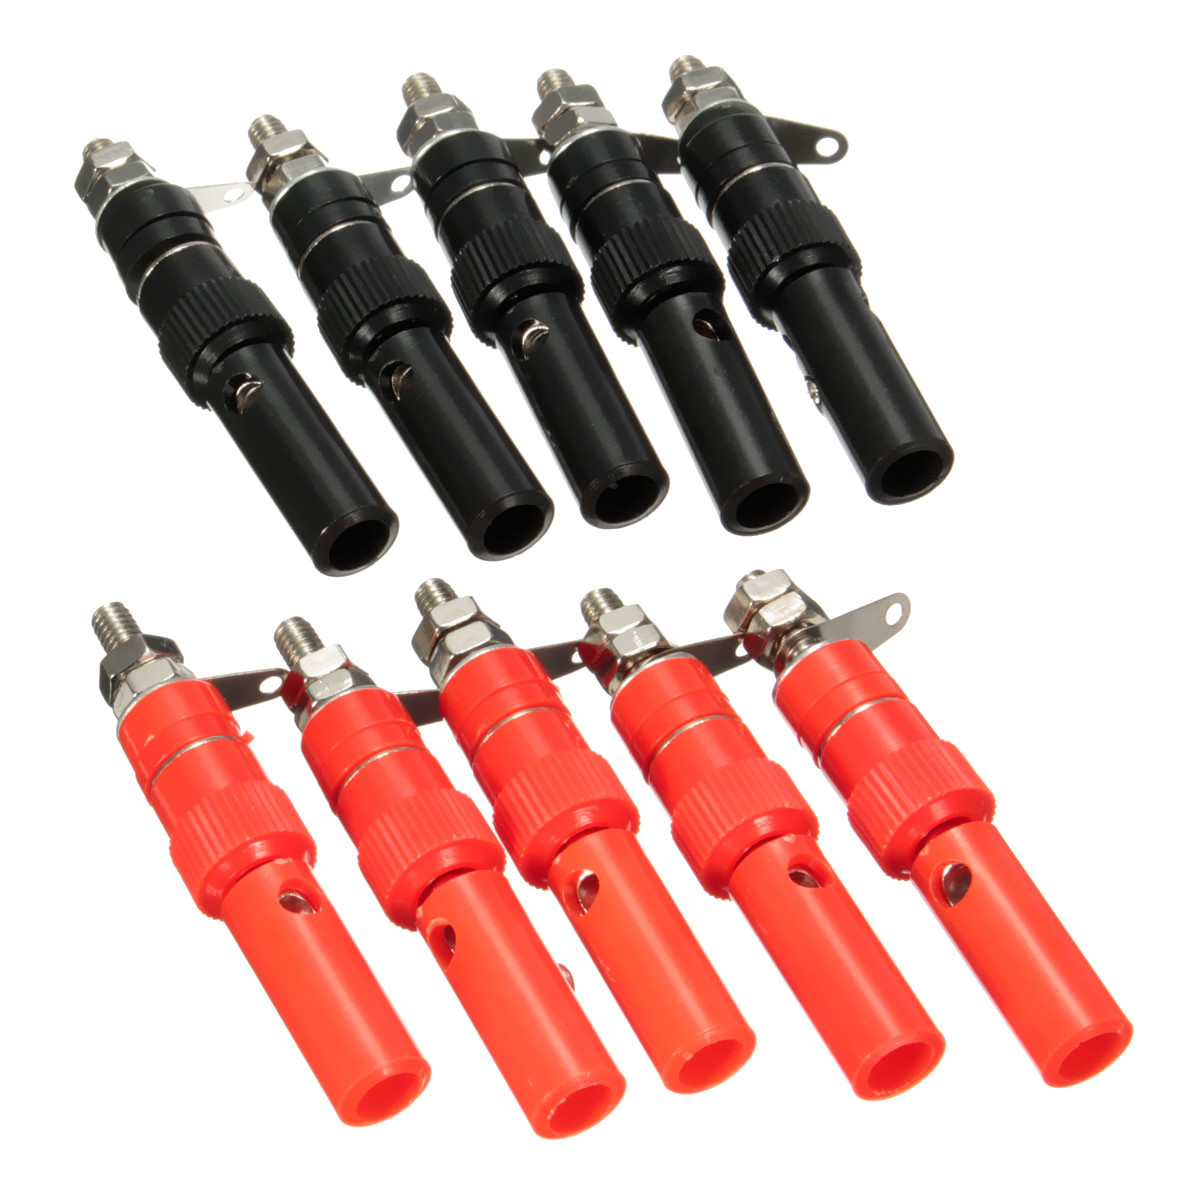 DANIU-10-Pairs-4mm-Terminal-Banana-Plug-Socket-Jack-Connectors-Instrument-Light-Tools-Black-and-Red-1046083-2